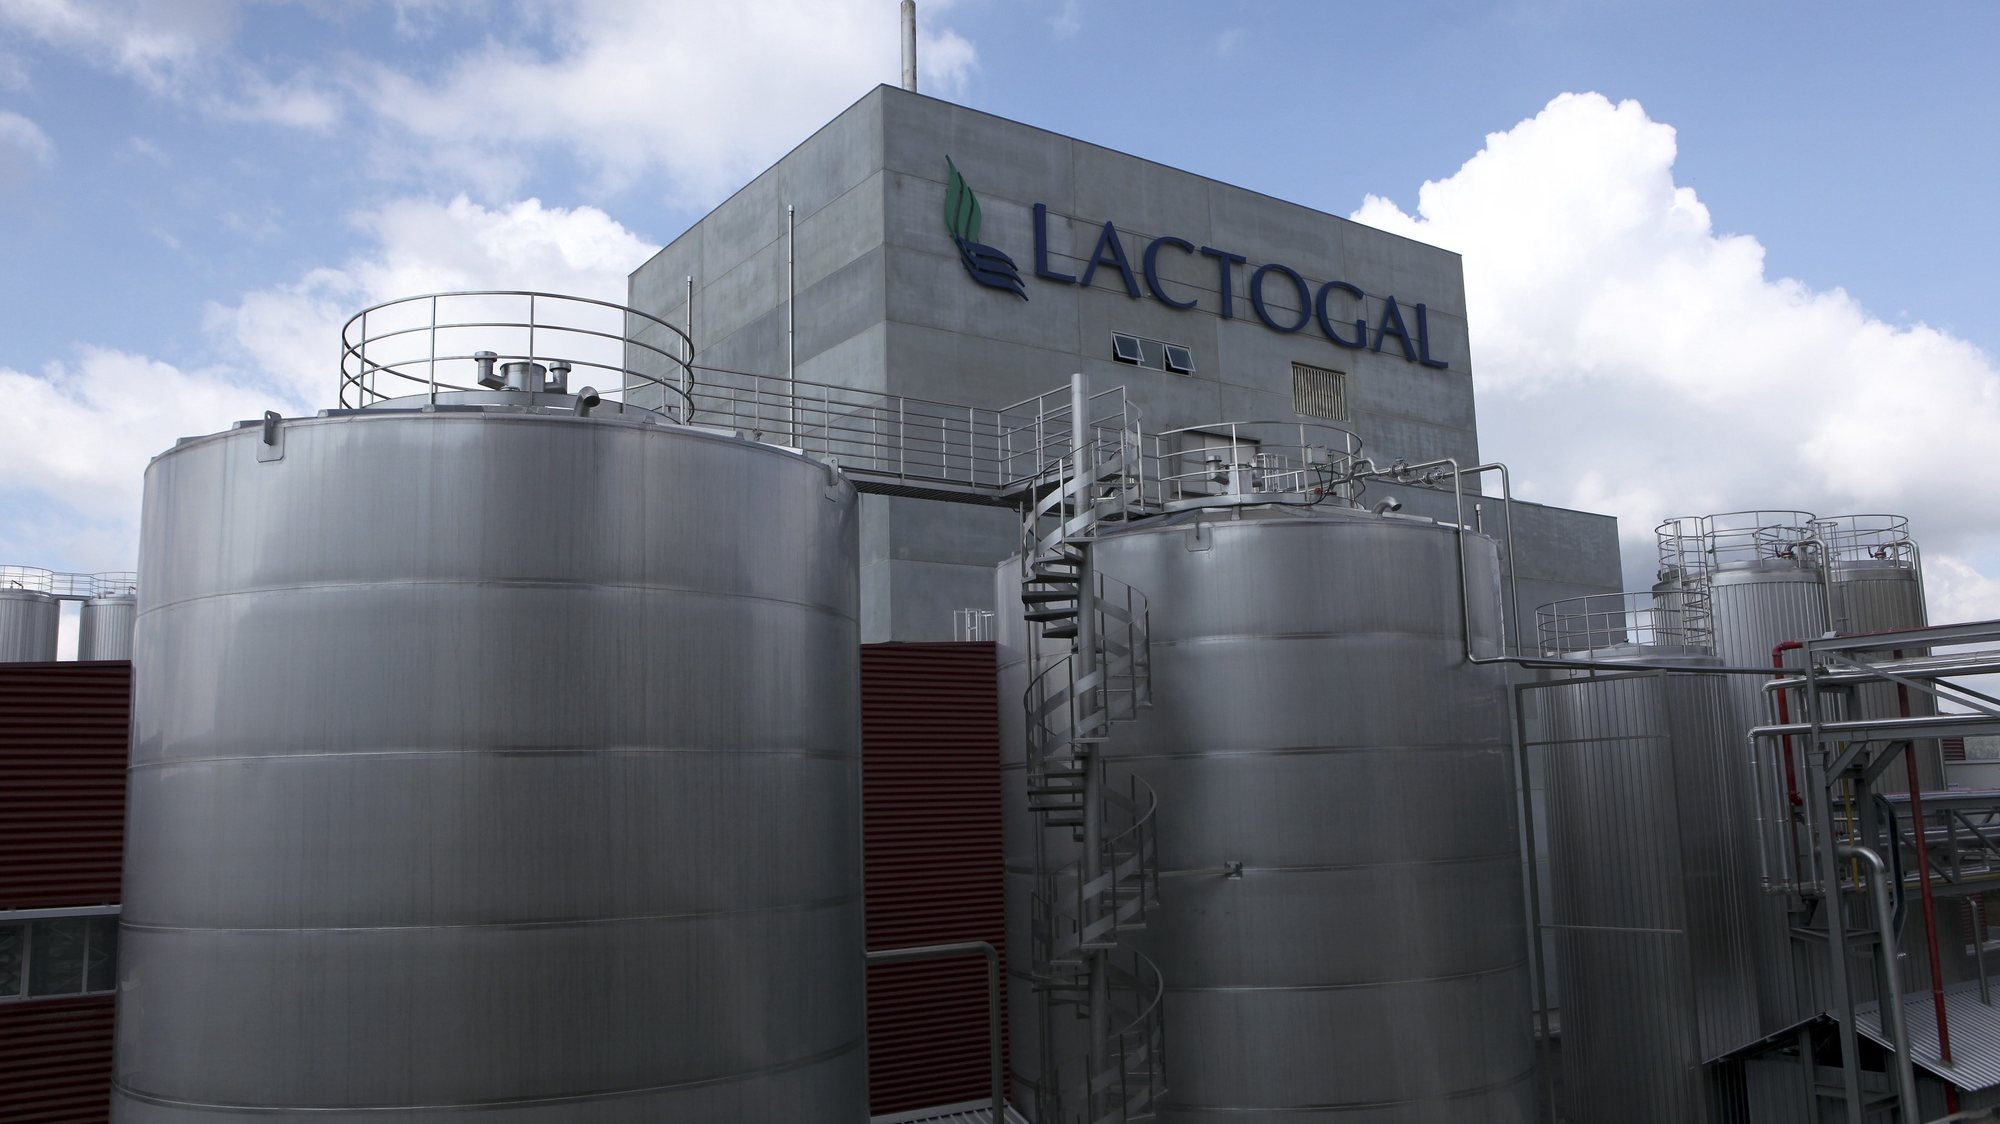 Fábrica de lacticínios da Lactogal, 17 de Setembro de 2209, em Oliveira de Azeméis. ANTÓNIO COTRIM/LUSA